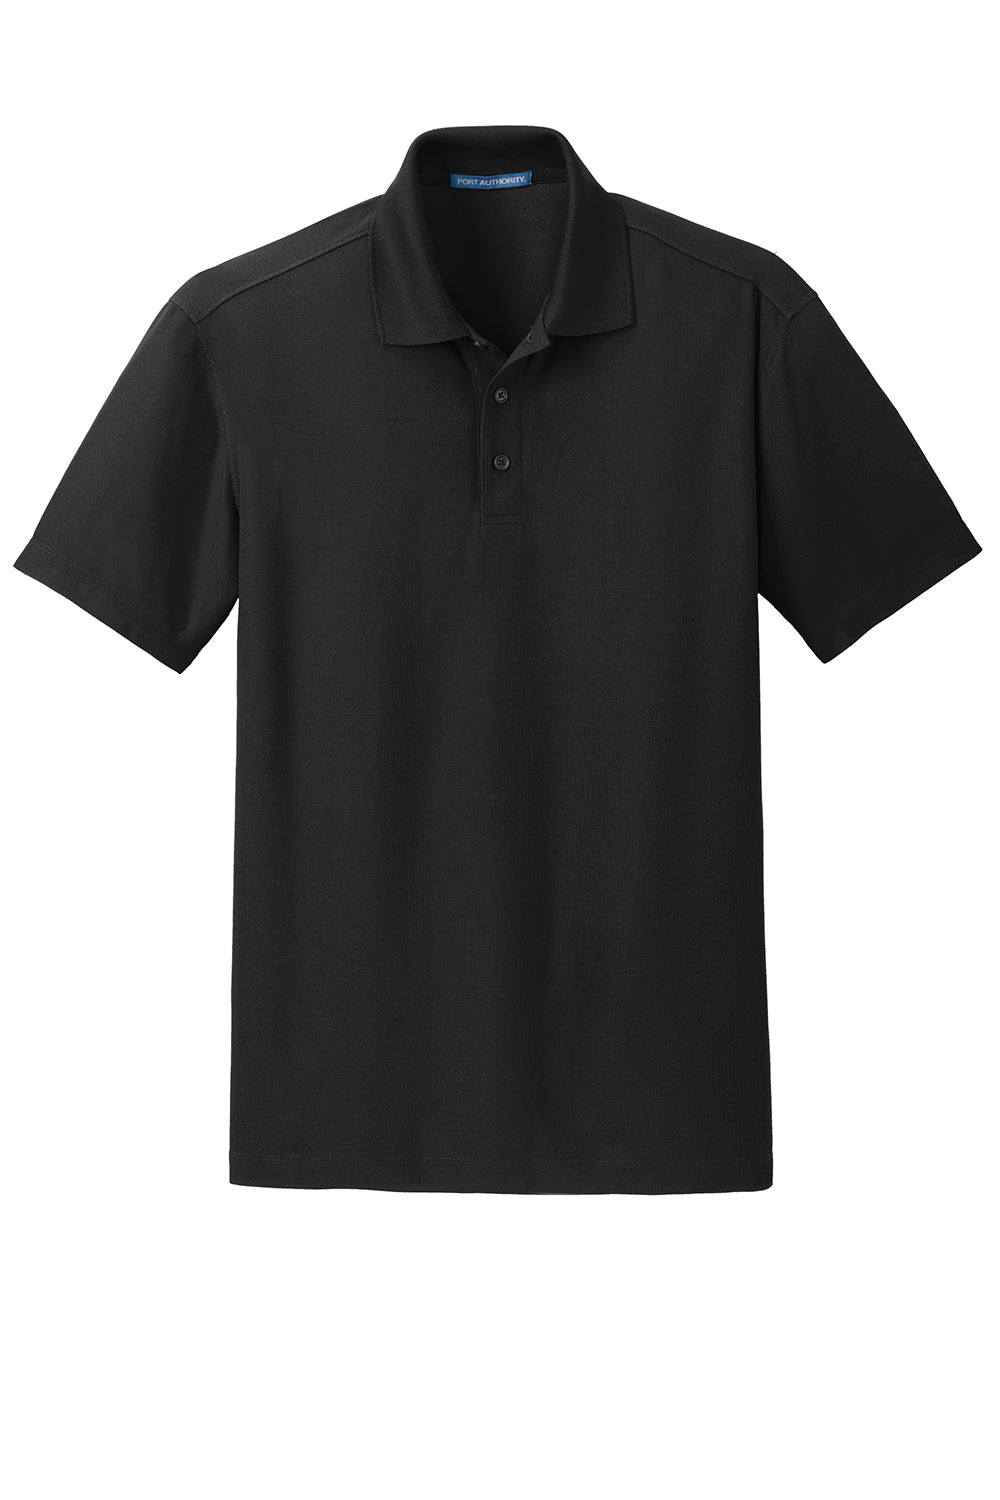 Port Authority K572 Mens Dry Zone Moisture Wicking Short Sleeve Polo Shirt Black Flat Front